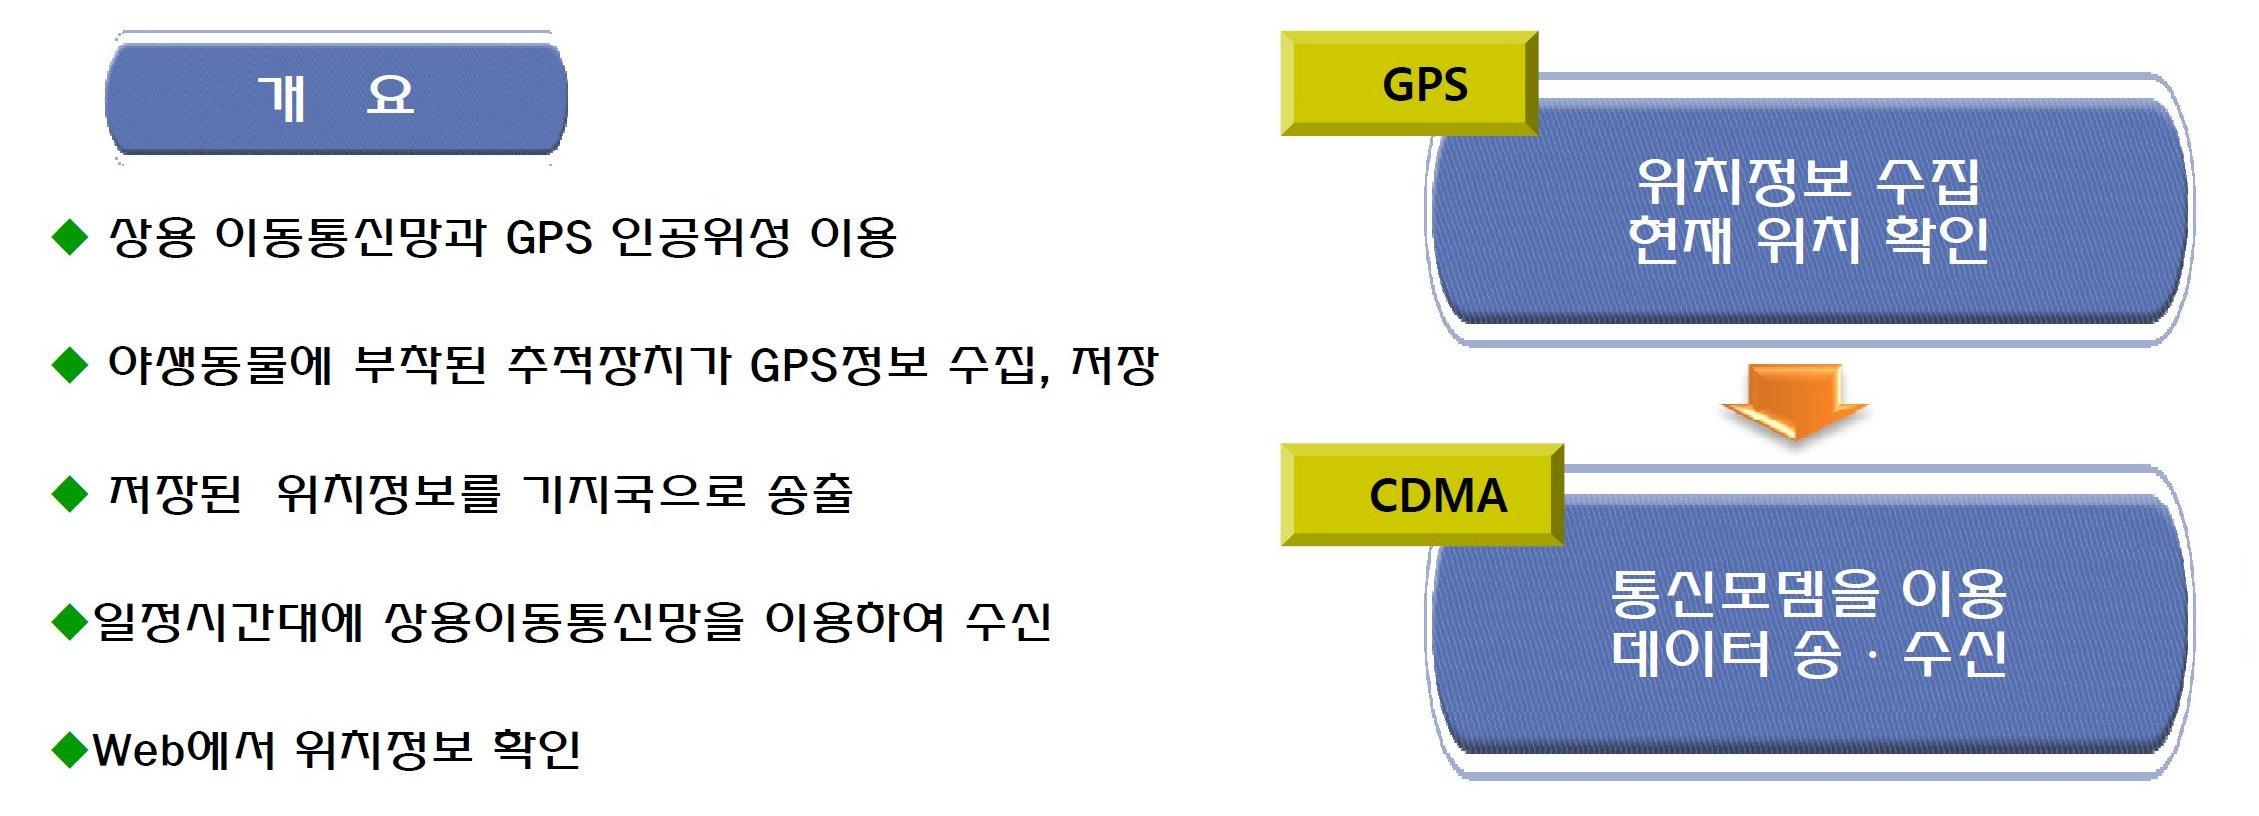 GCT(GPS-CDMA based Telemetry)의 추적방식 개요 (한국환경생태연구소)